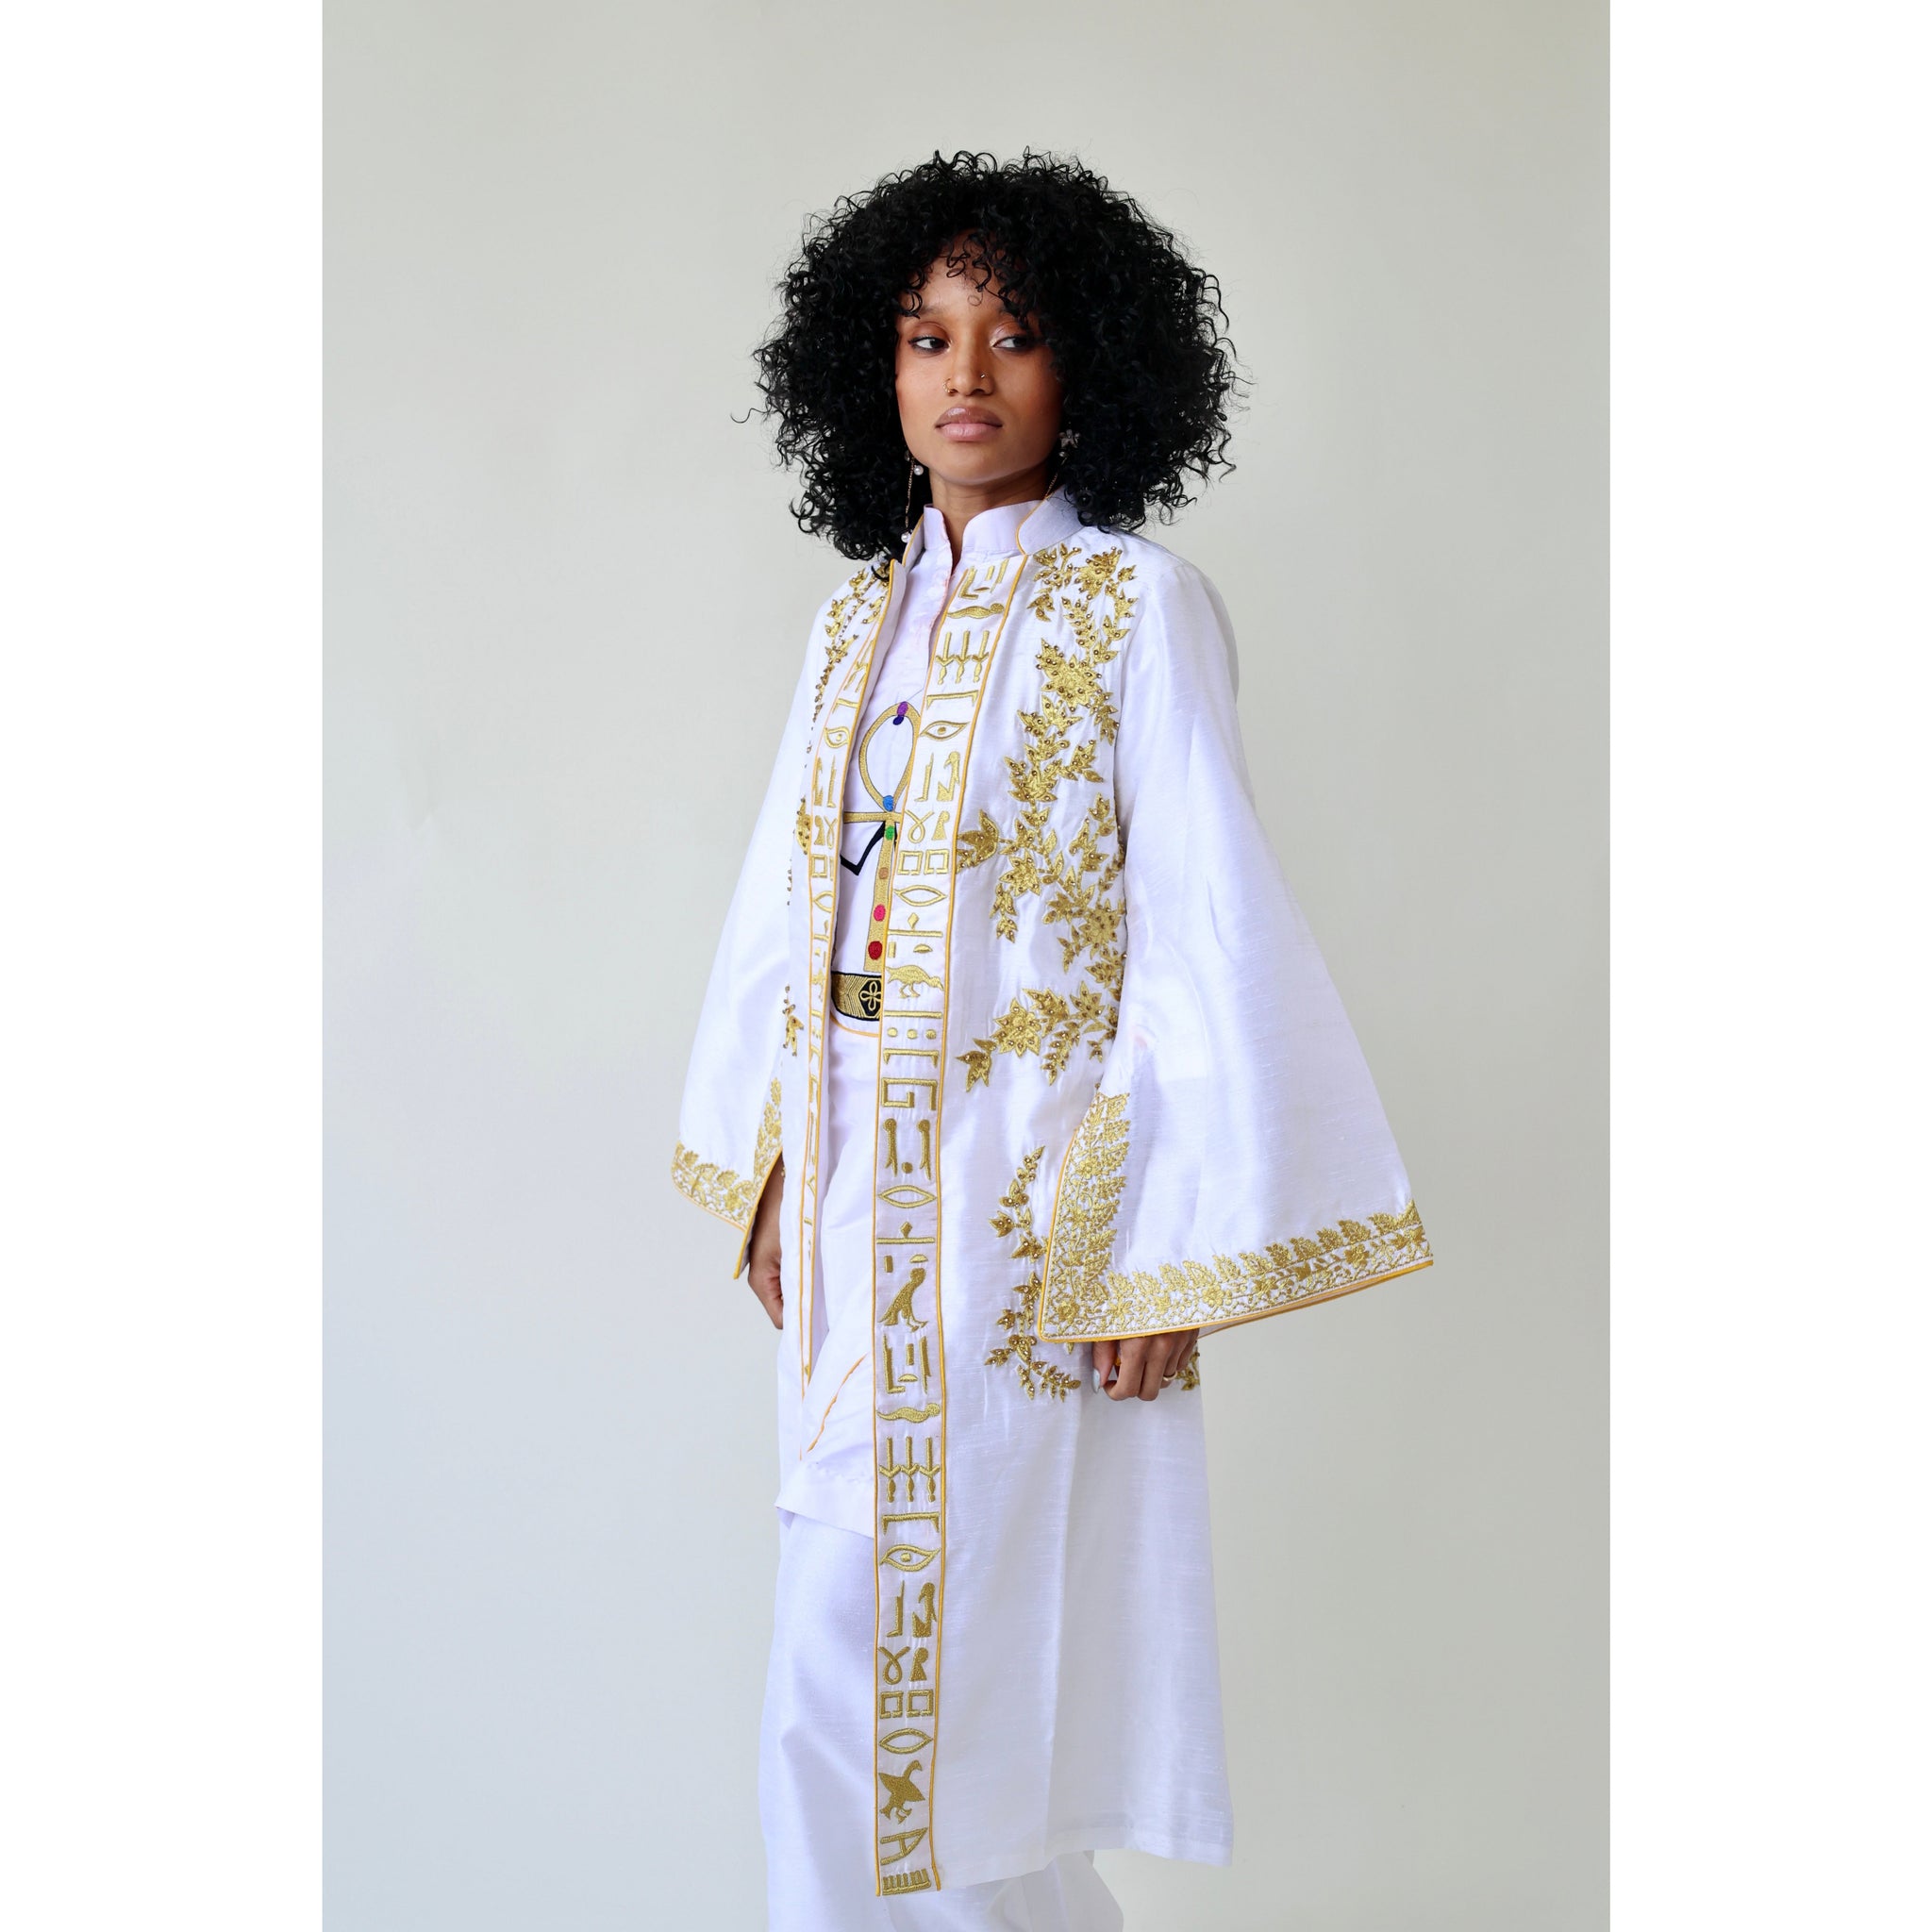 New Kingdom Priestess Robe